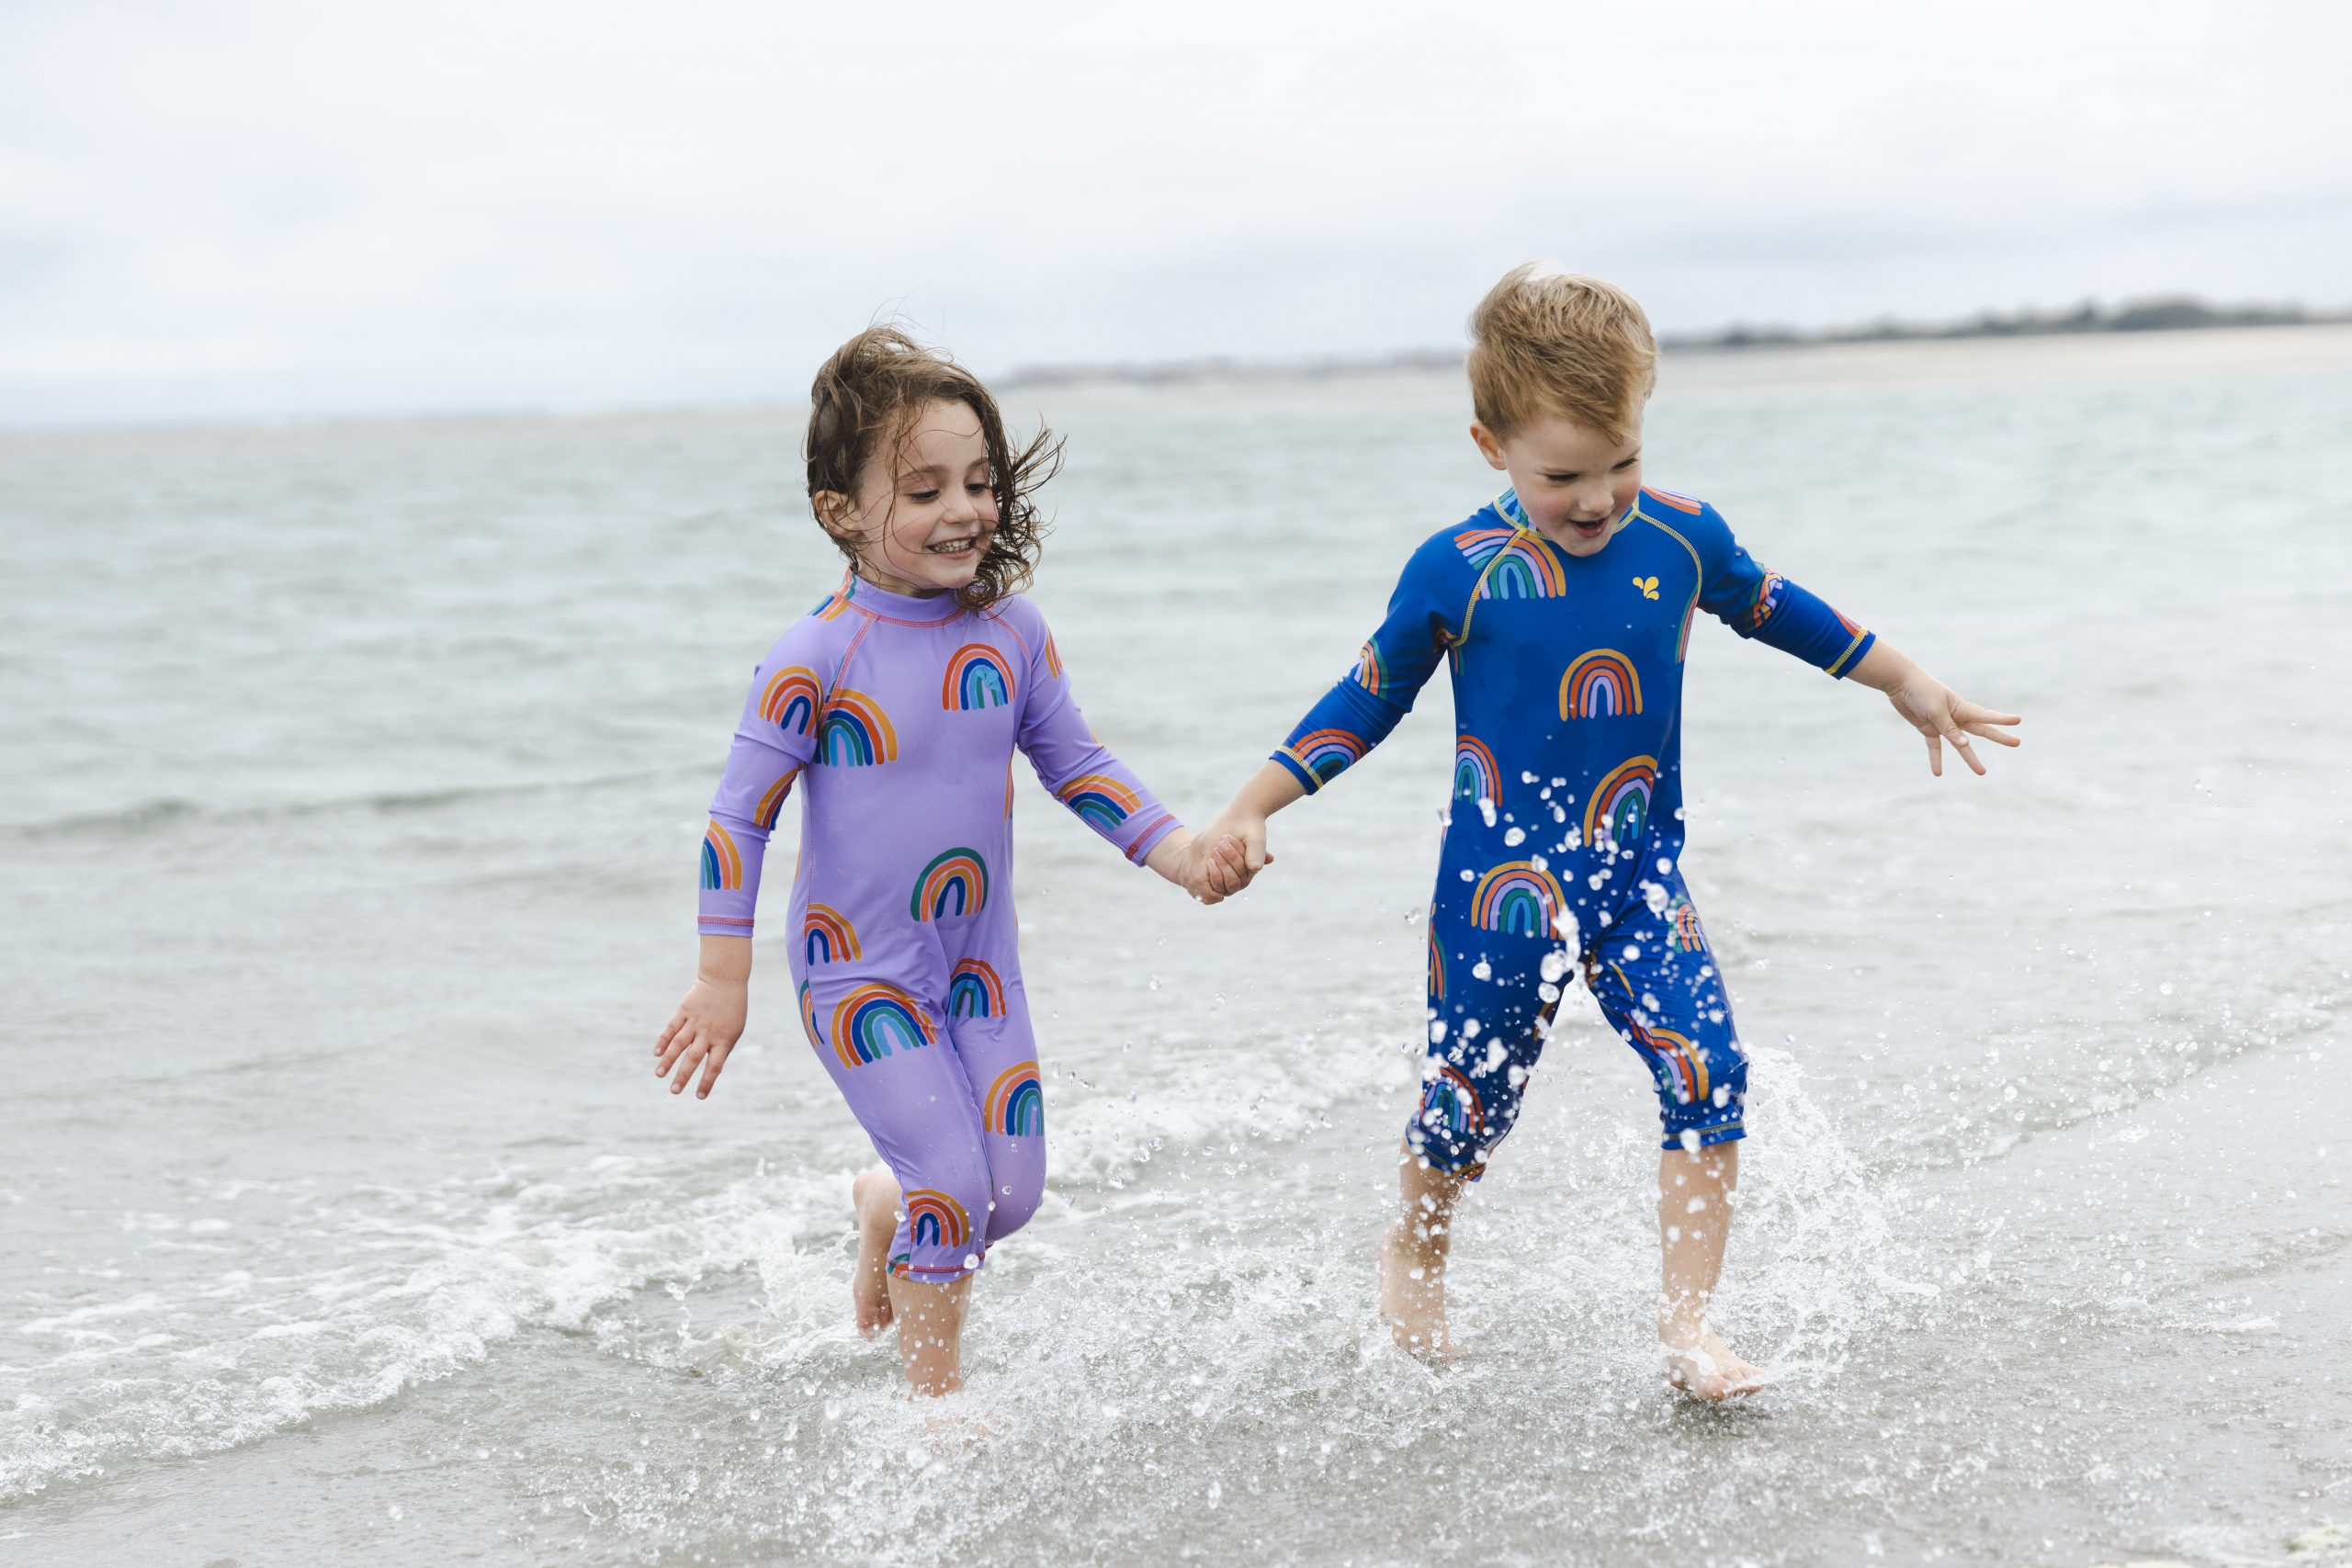 2 young children running through shallow sea water on a beach